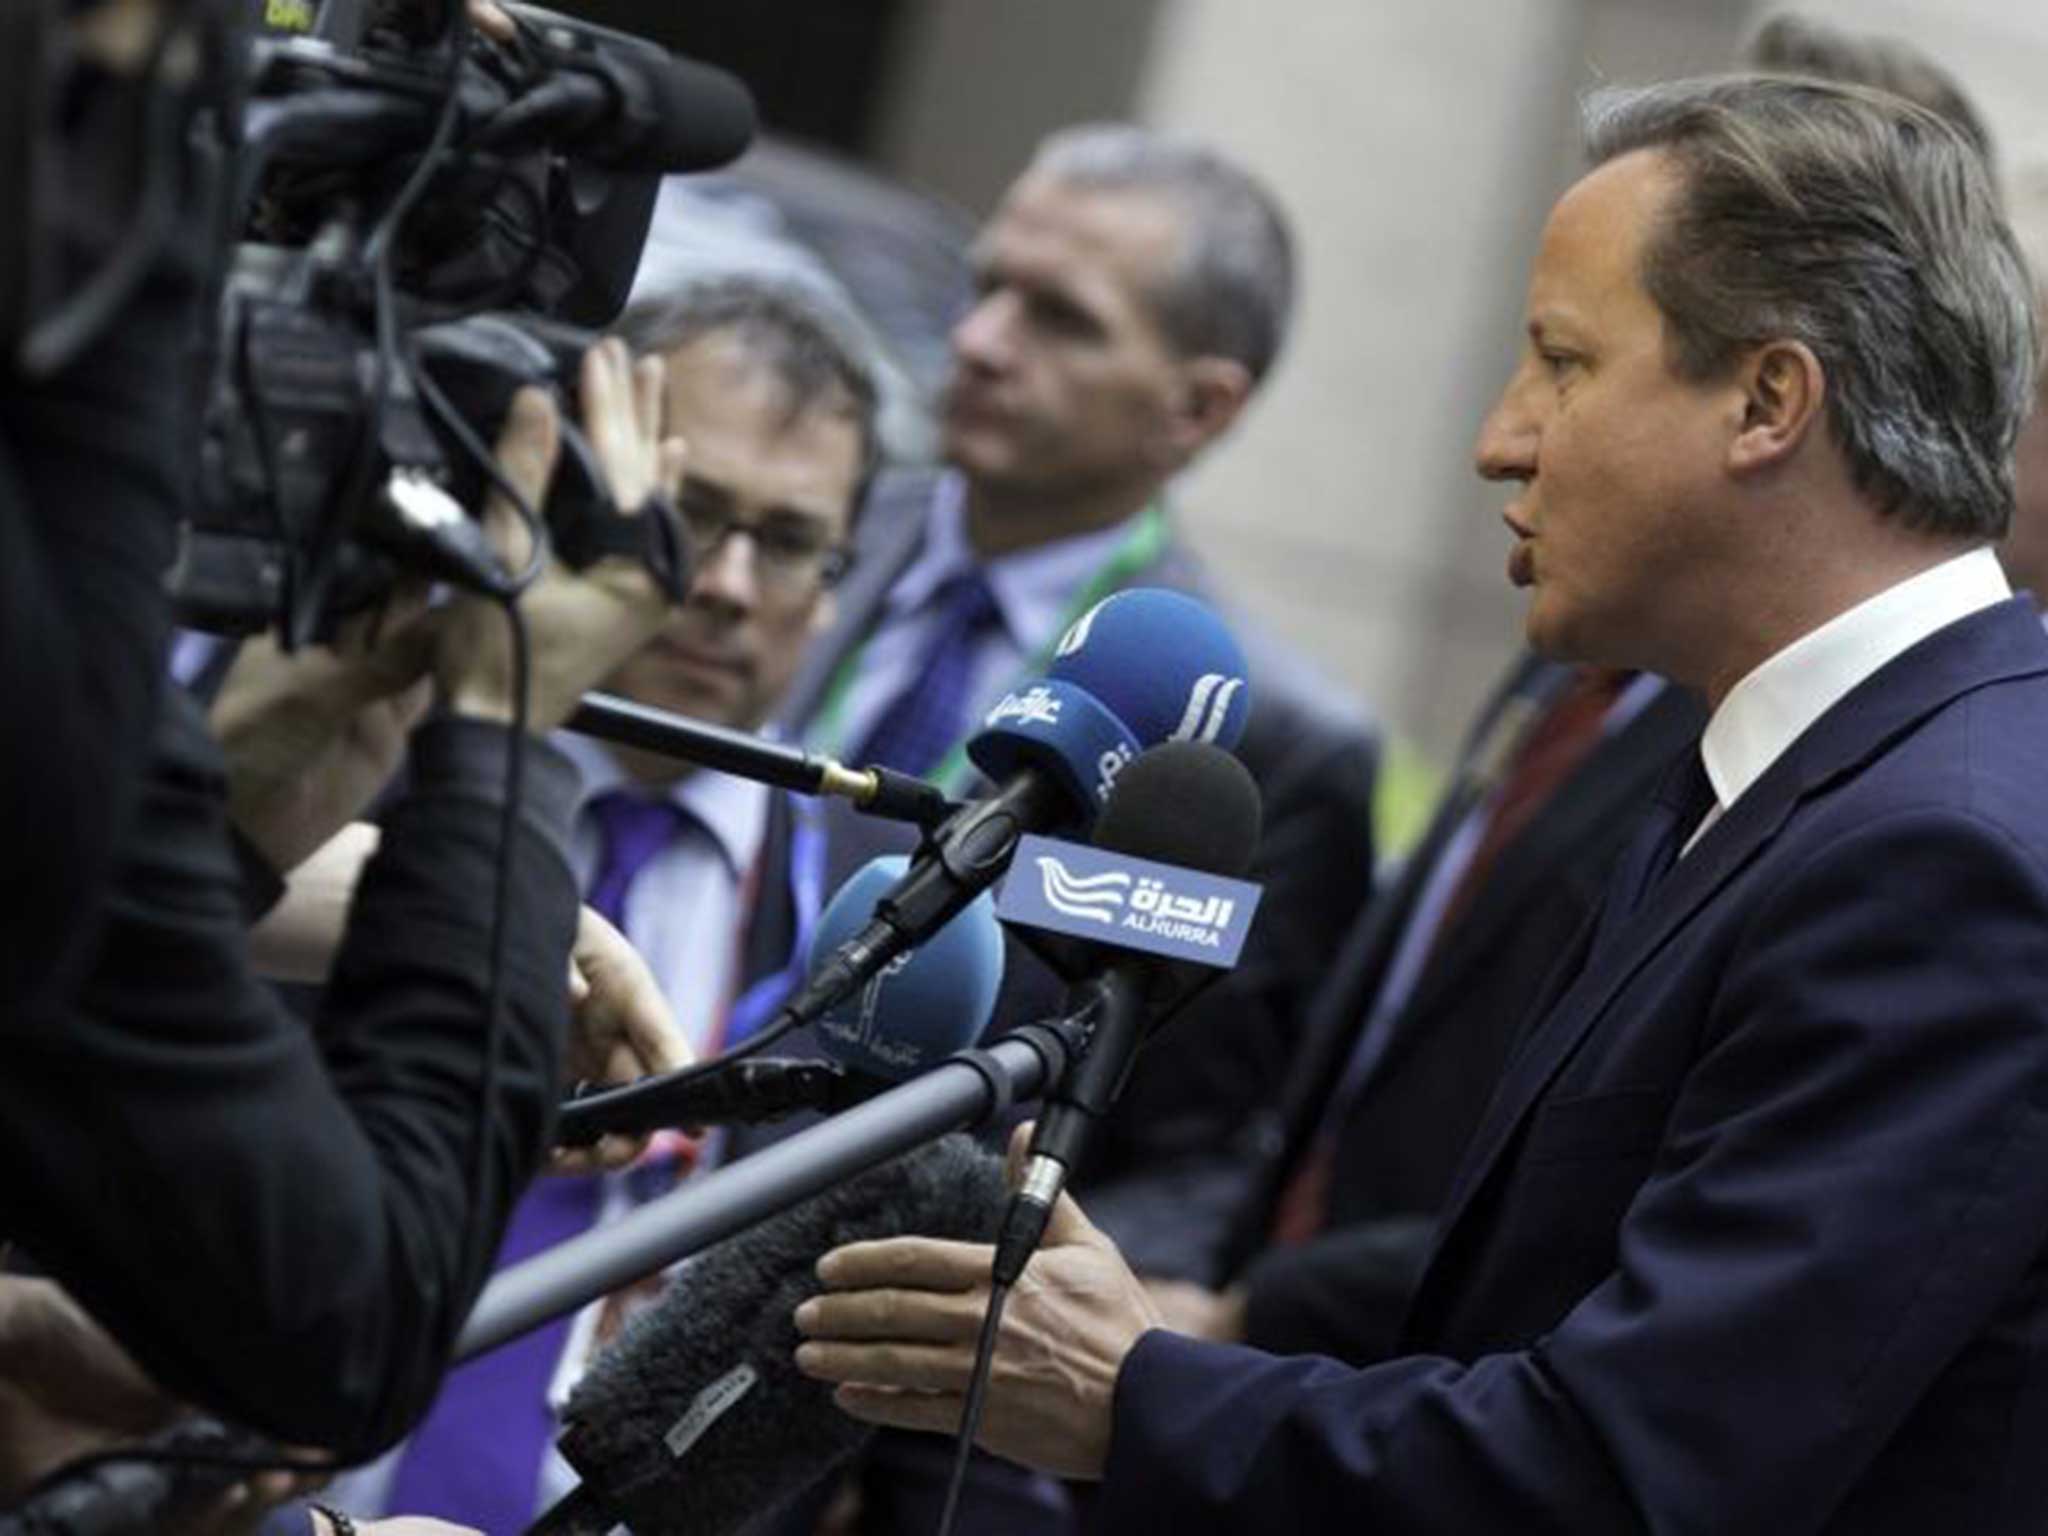 David Cameron arrives in Brussels